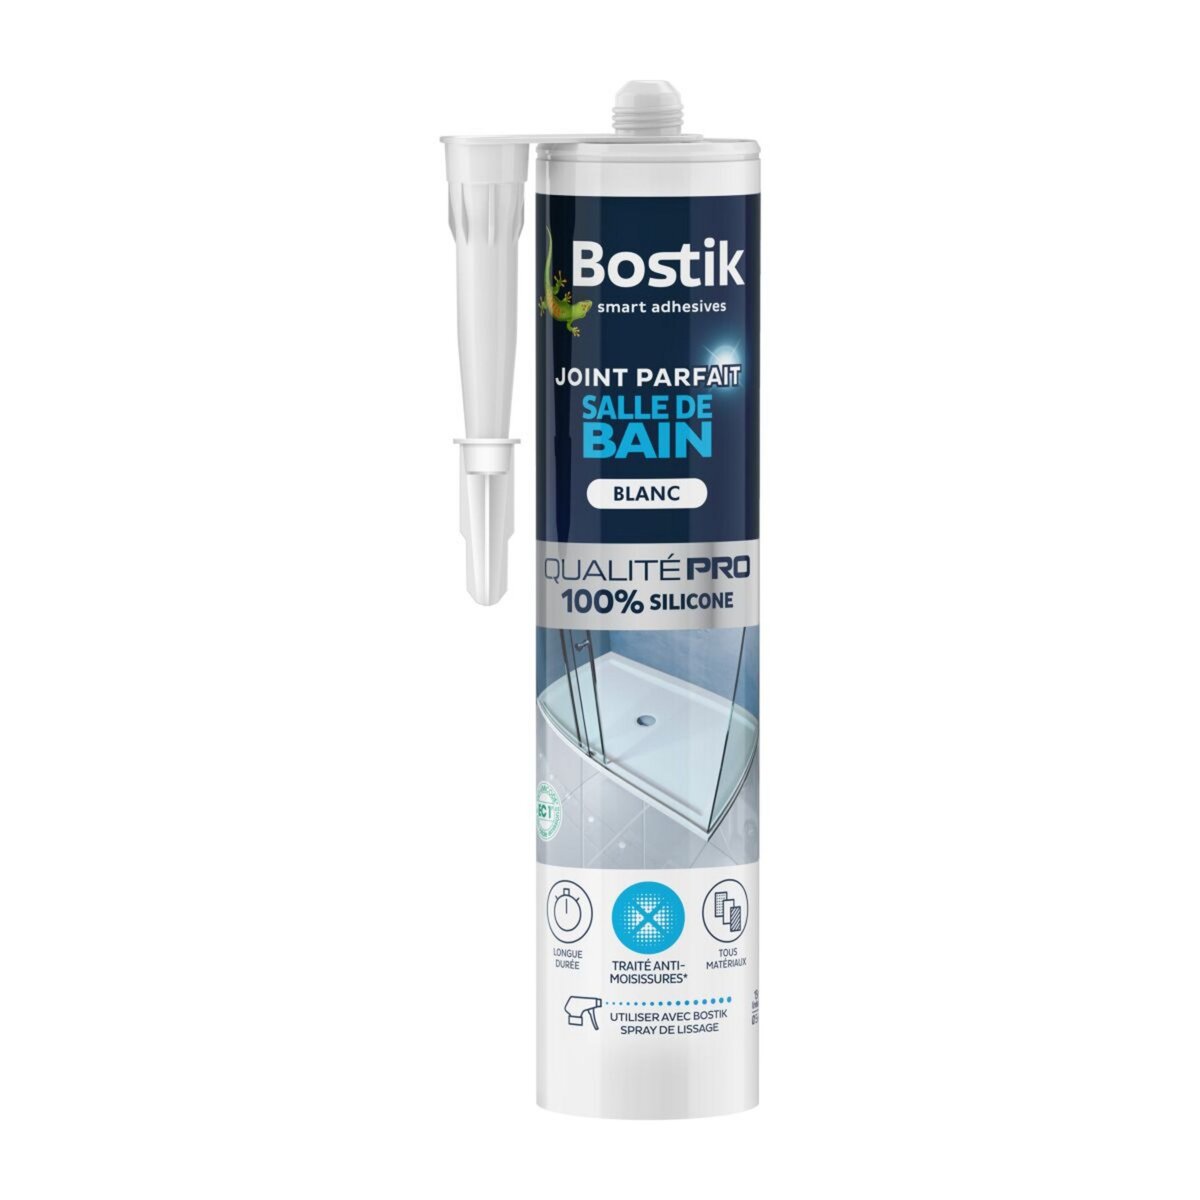 BOSTIK Joint parfait salle de bain blanc 280 ml Bostik 